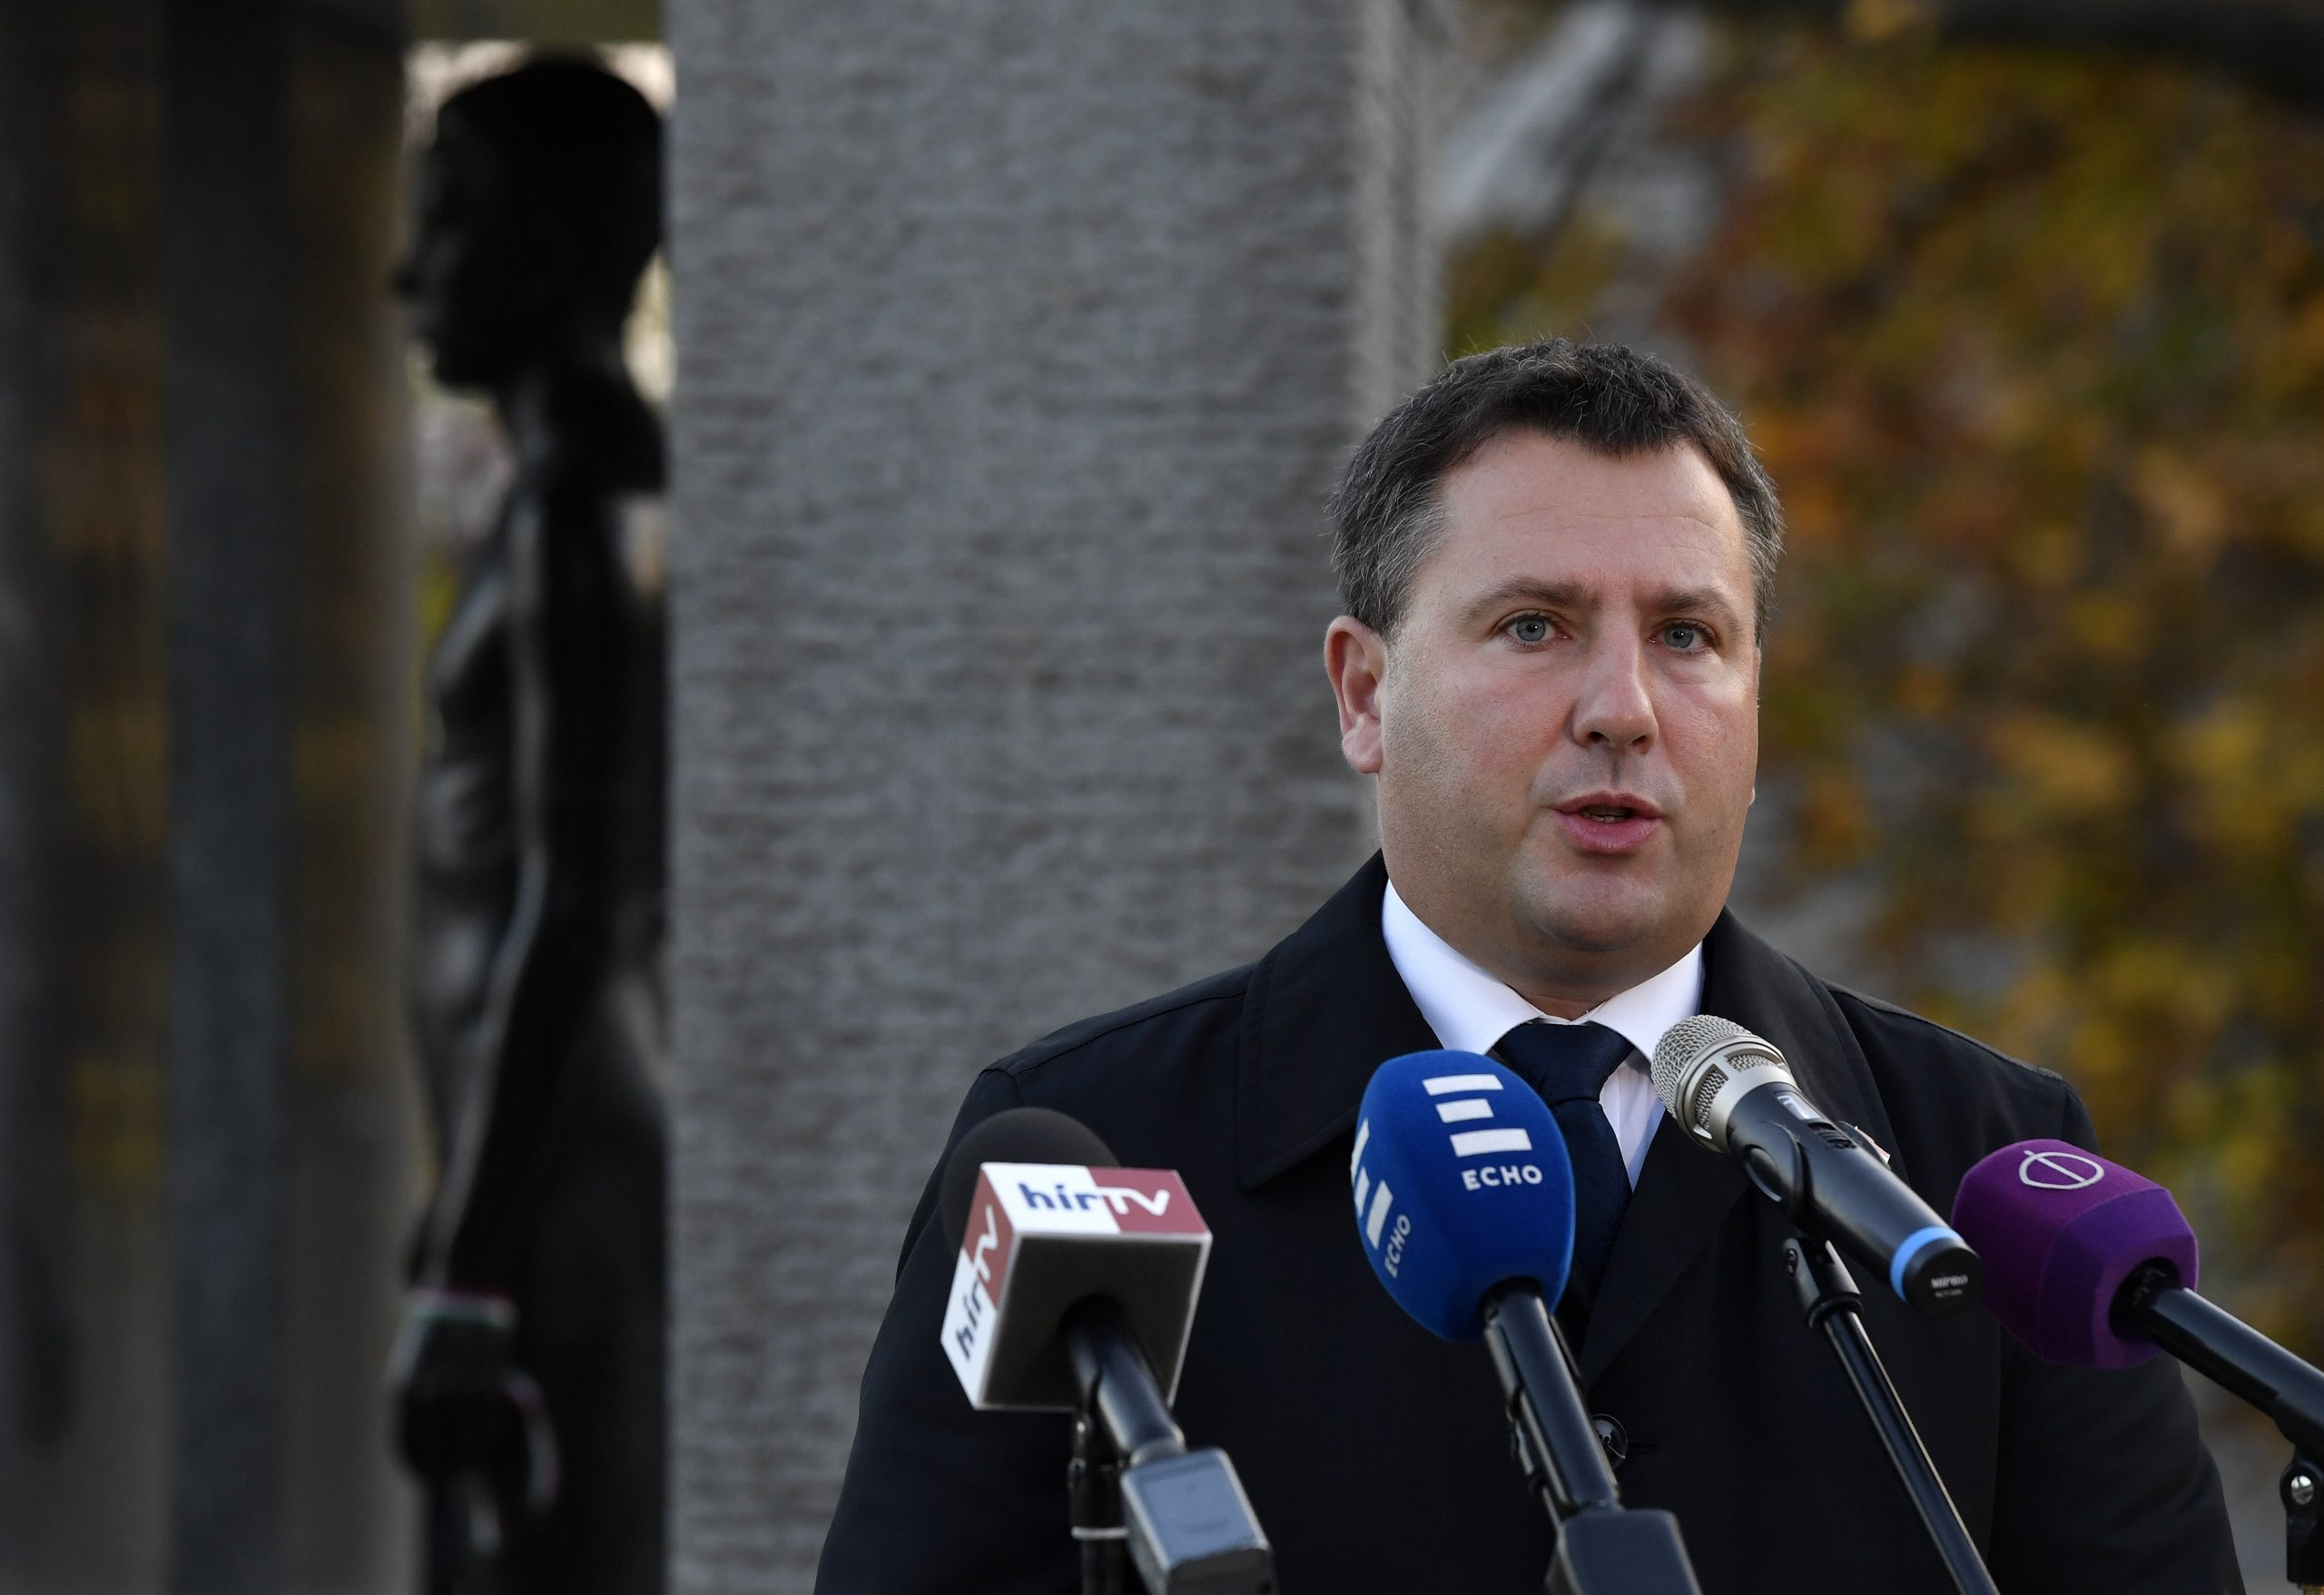 Fidesz: Mayor Karácsony Has Deserted Budapest